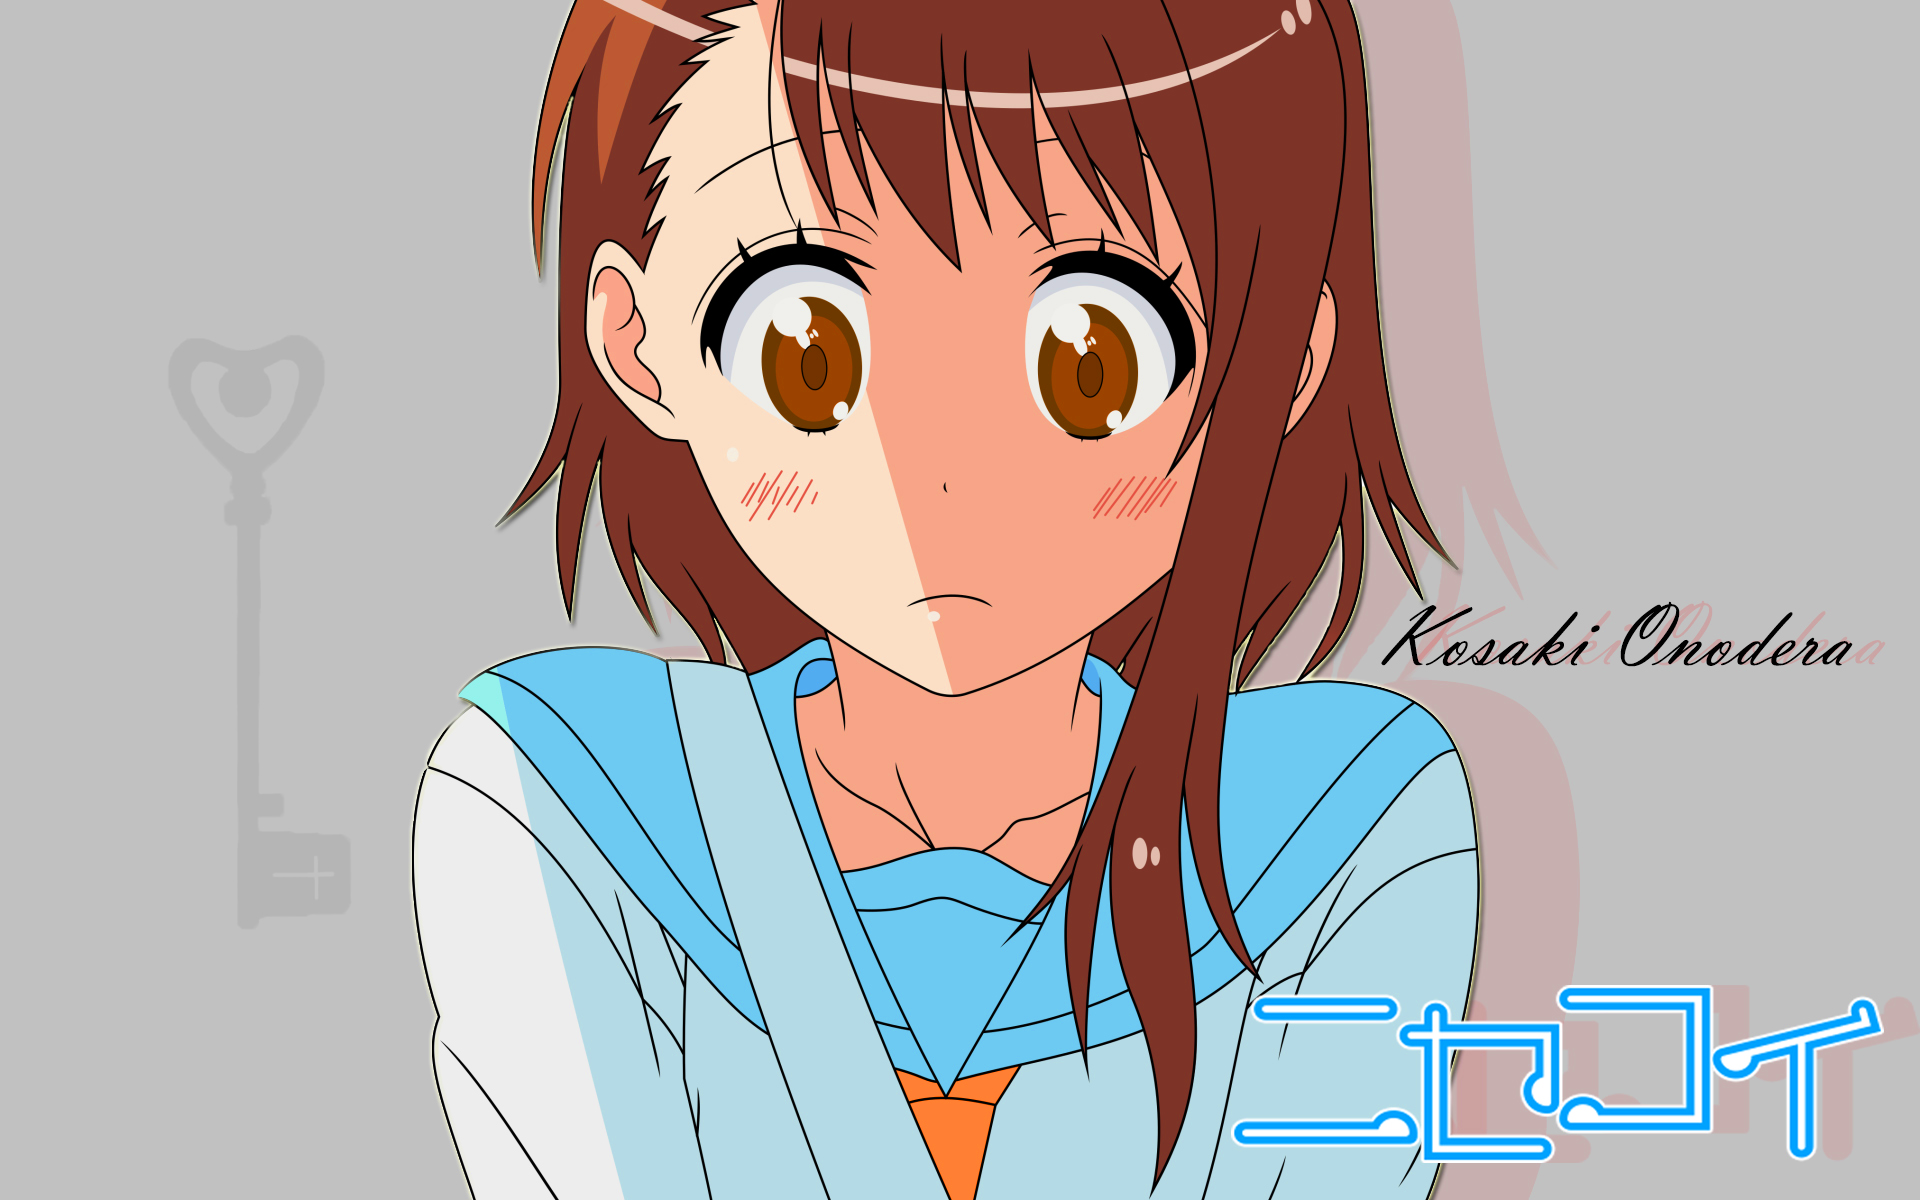 Kosaki Onodera - Wallpaper - Anime Female Looking Down , HD Wallpaper & Backgrounds